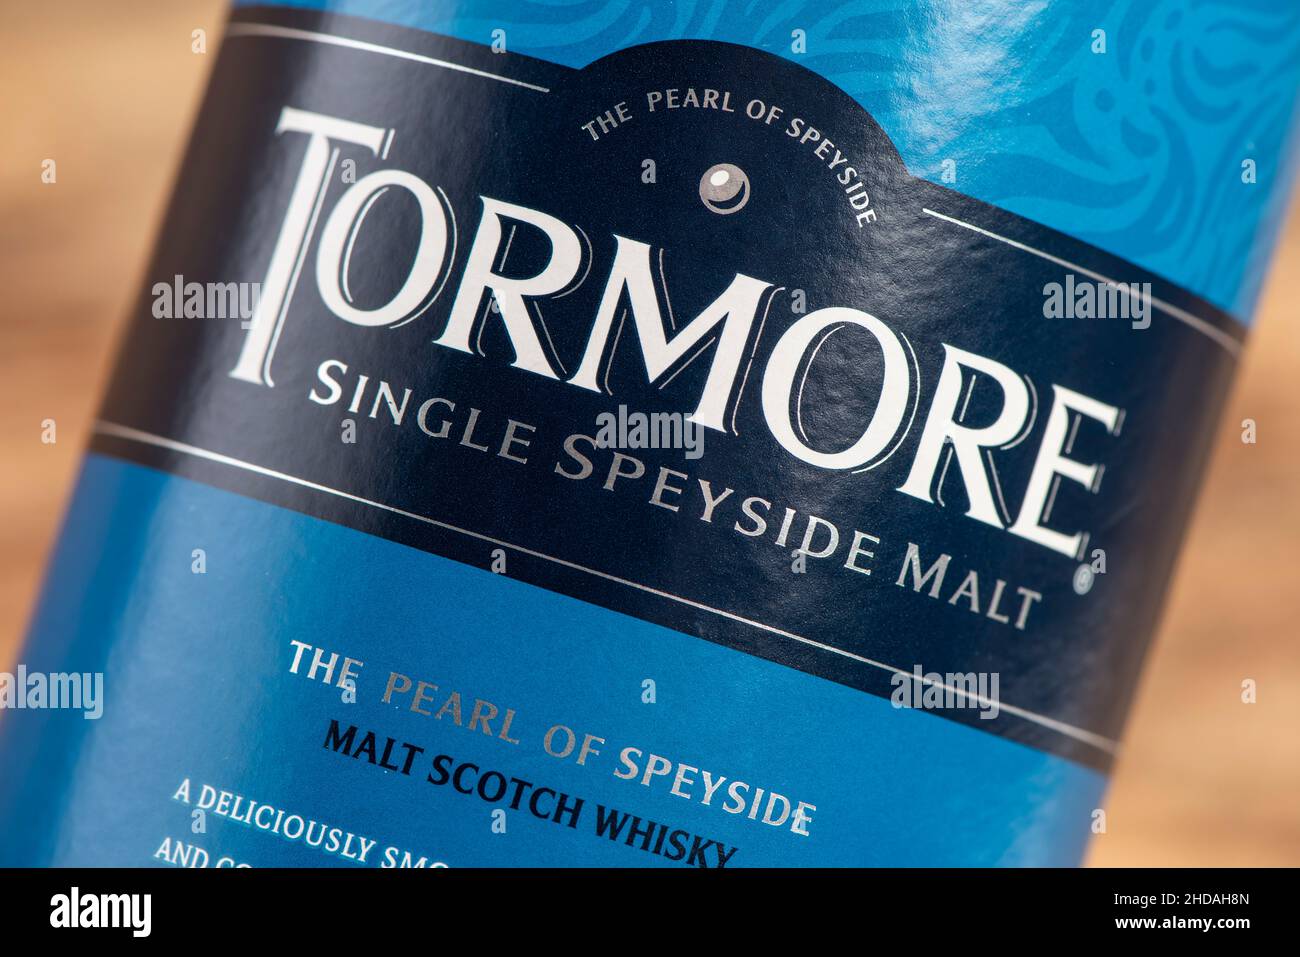 EDINBURGH, SCOTLAND - DECEMBER 23, 2021: box of 12 years old TORMORE single malt scotch whisky Stock Photo